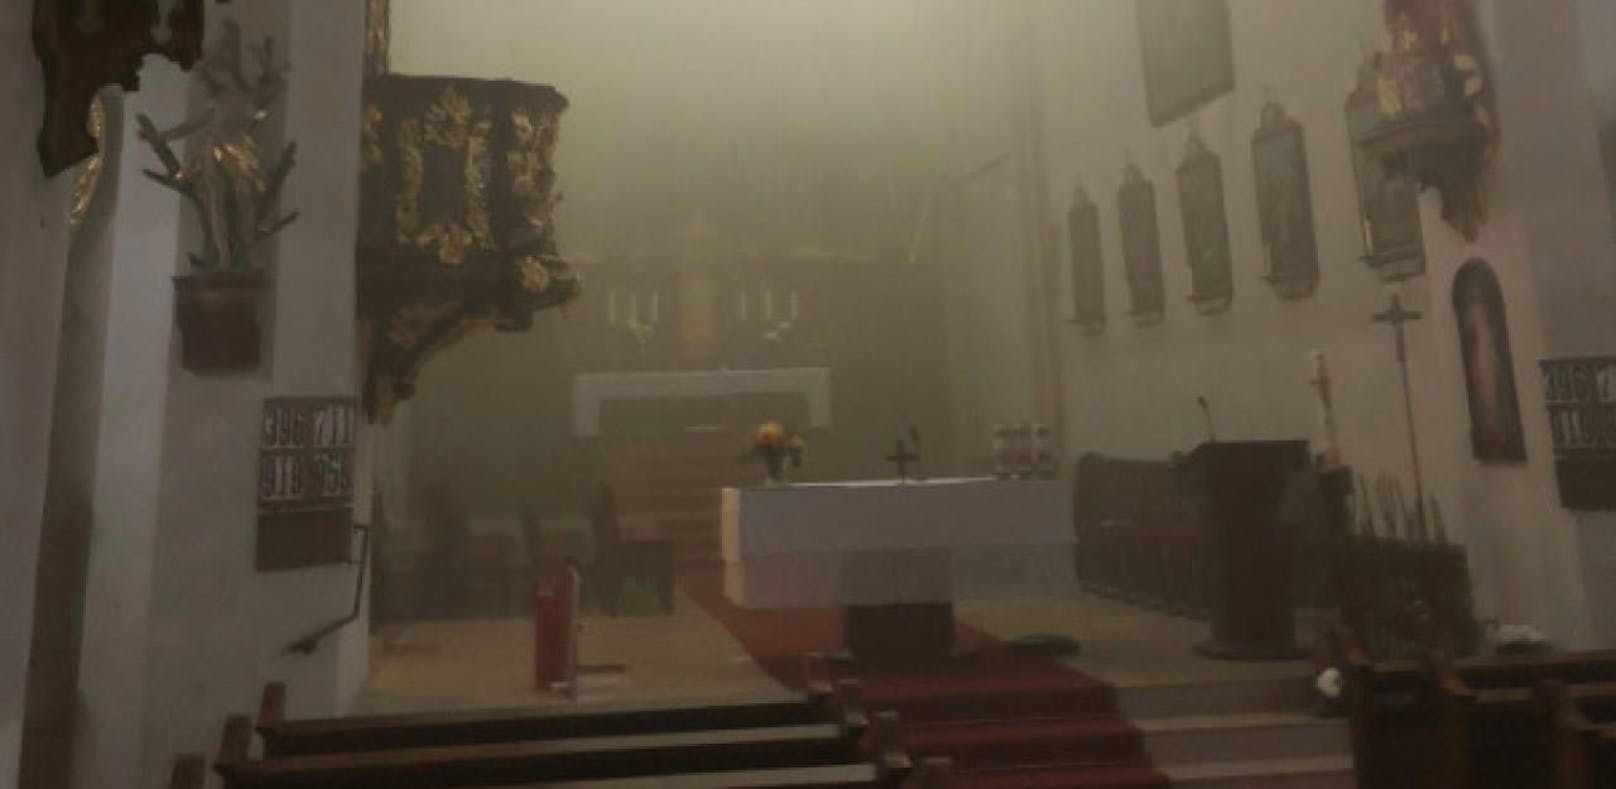 Brand in Kirche: Großer Sachschaden